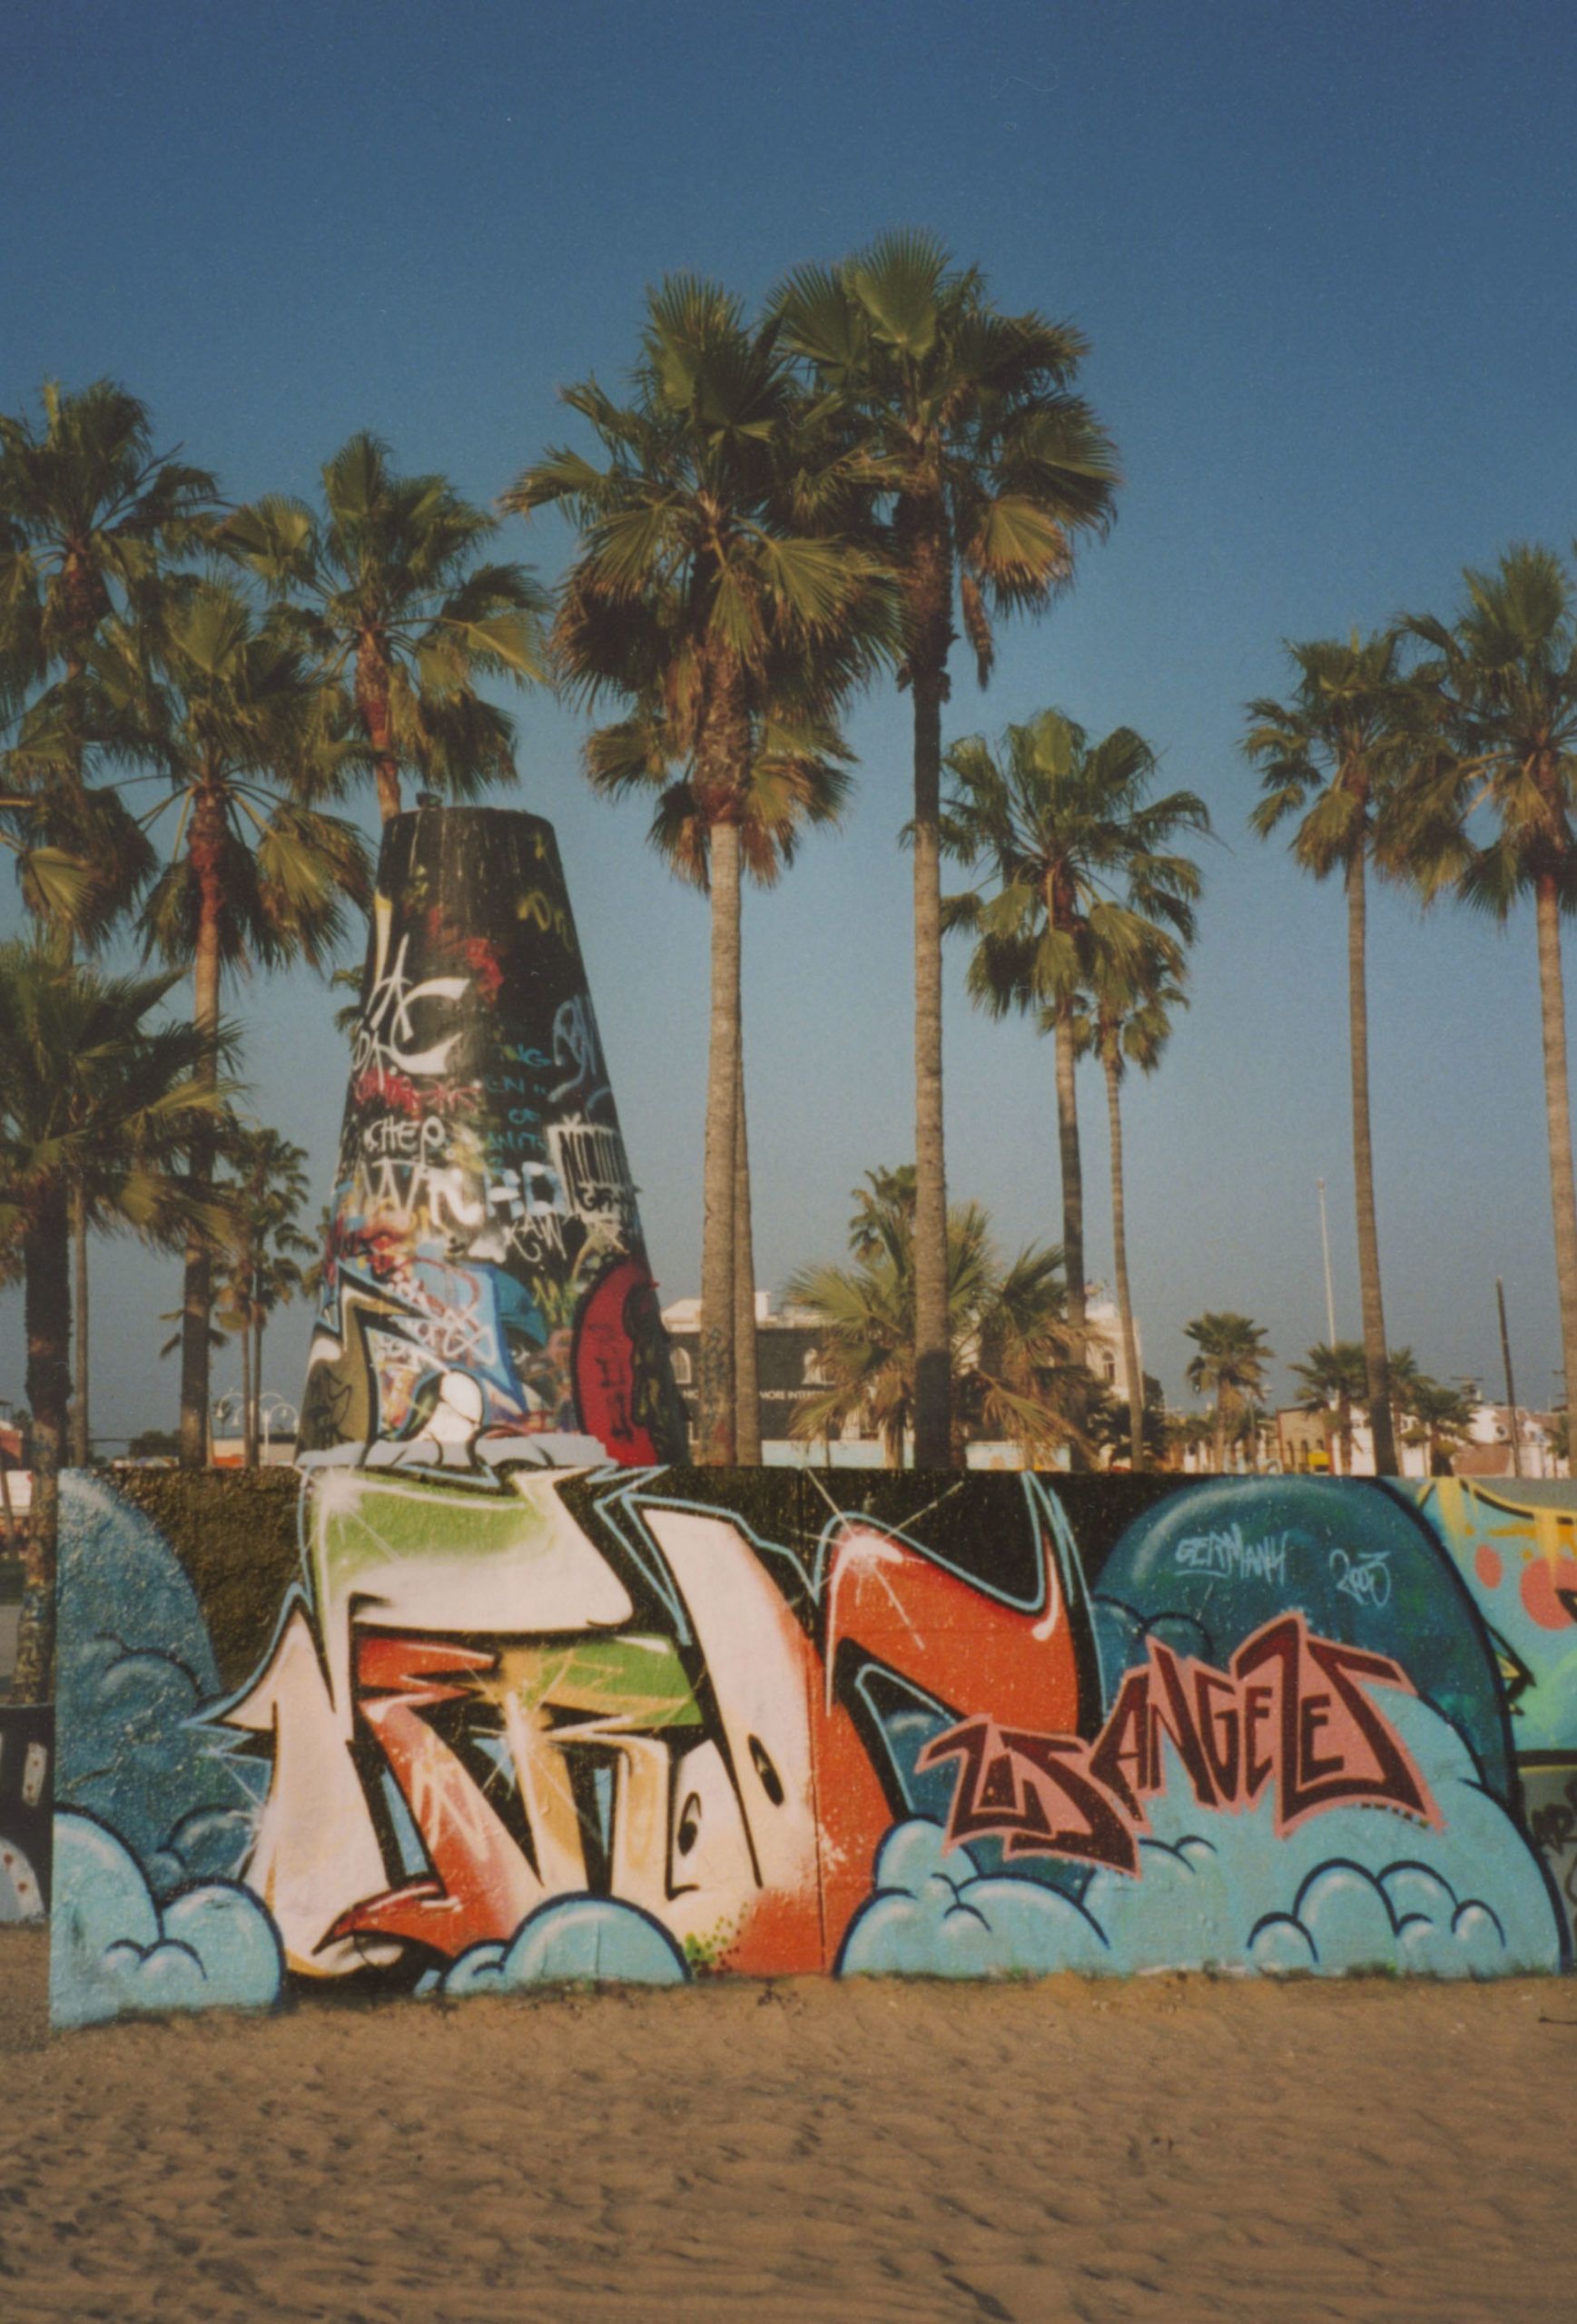 Los Angeles 2003